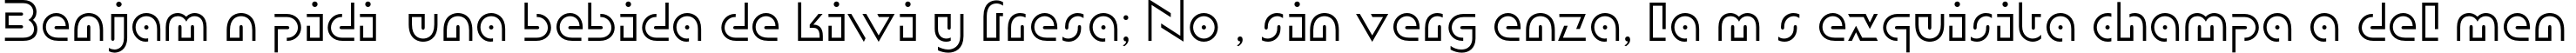 Пример написания шрифтом DublonLightC текста на испанском